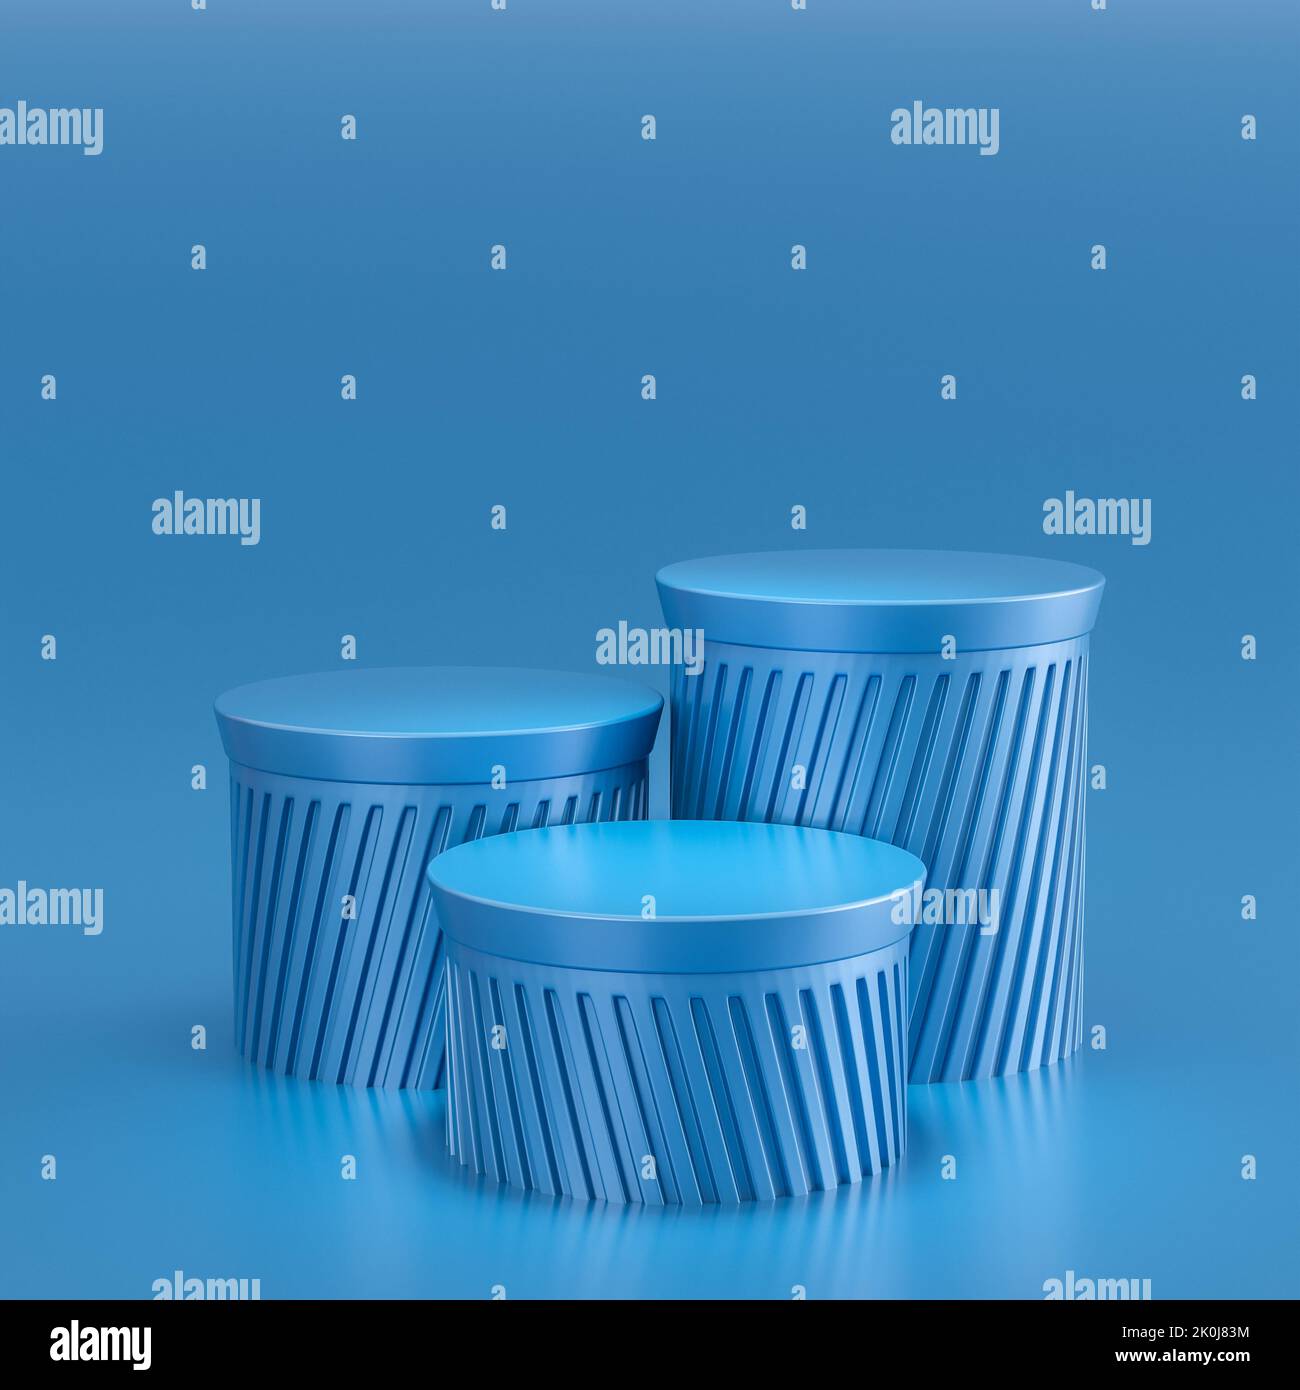 3 classic column podiums in blue tones. 3d render Stock Photo